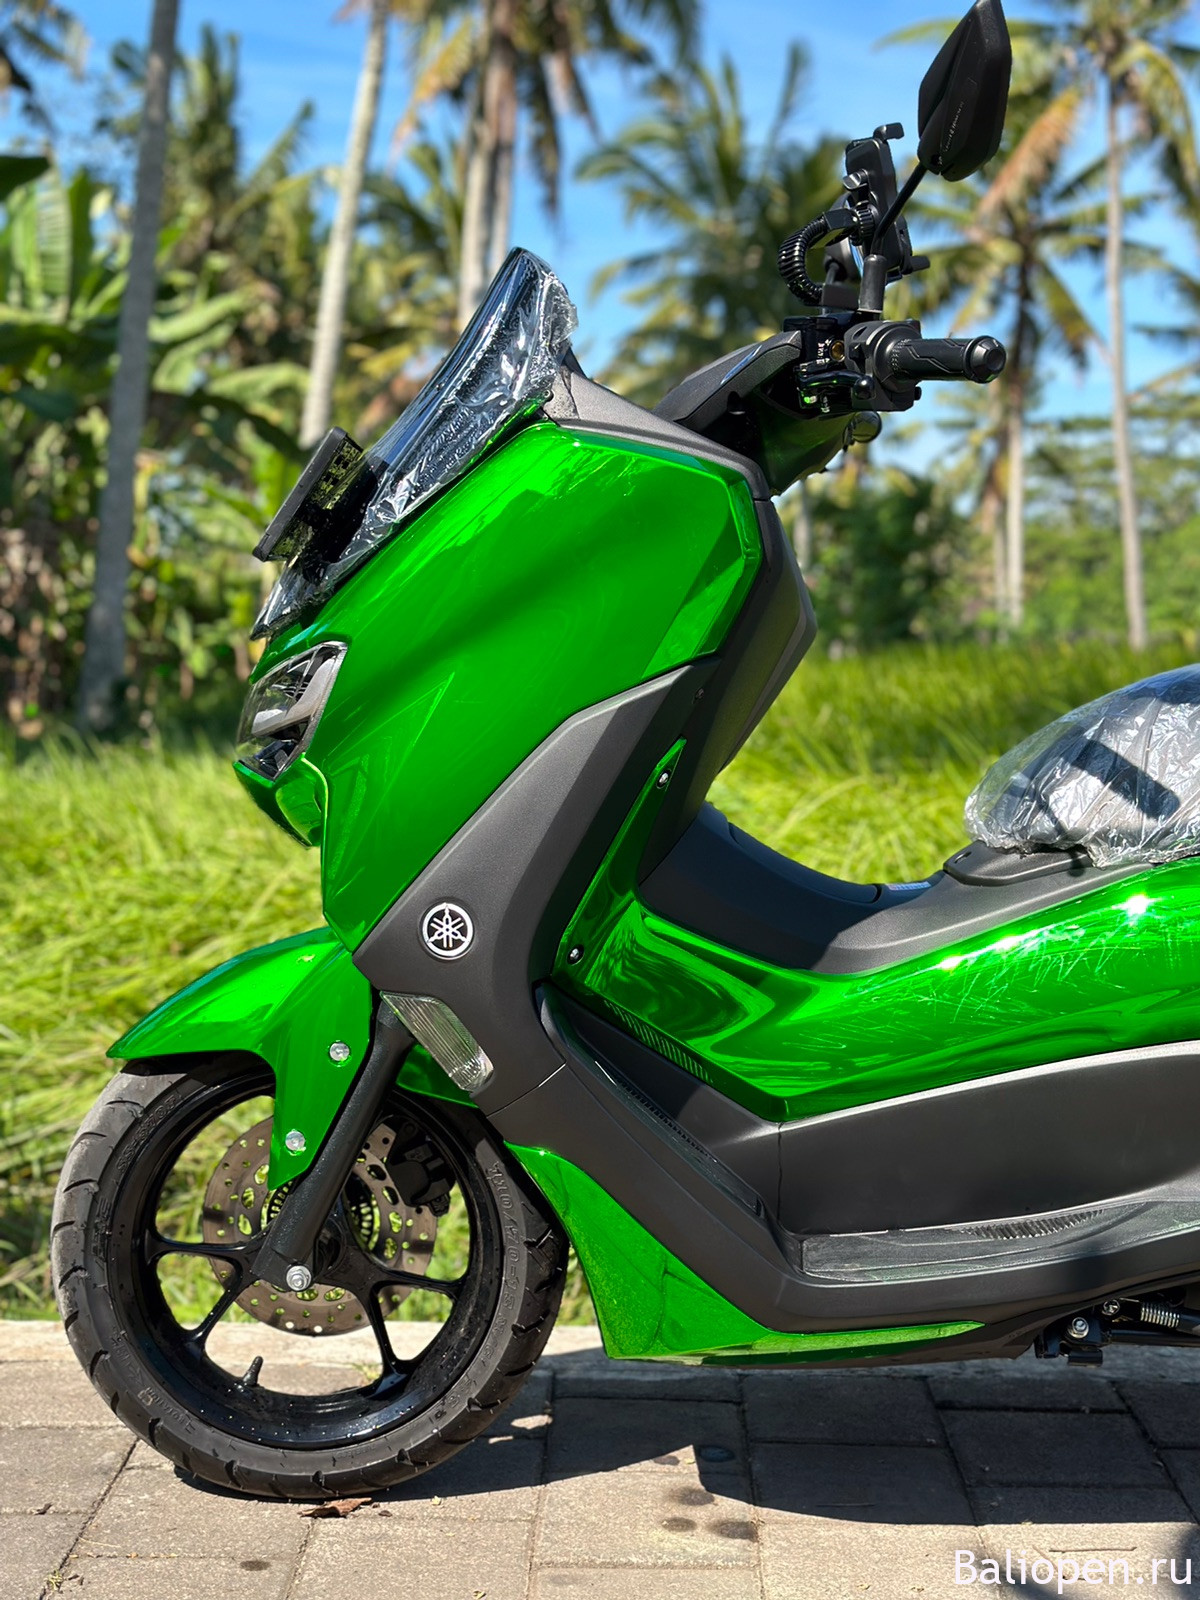 Аренда мотоцикла на Бали. Где найти мотобайк в аренду?